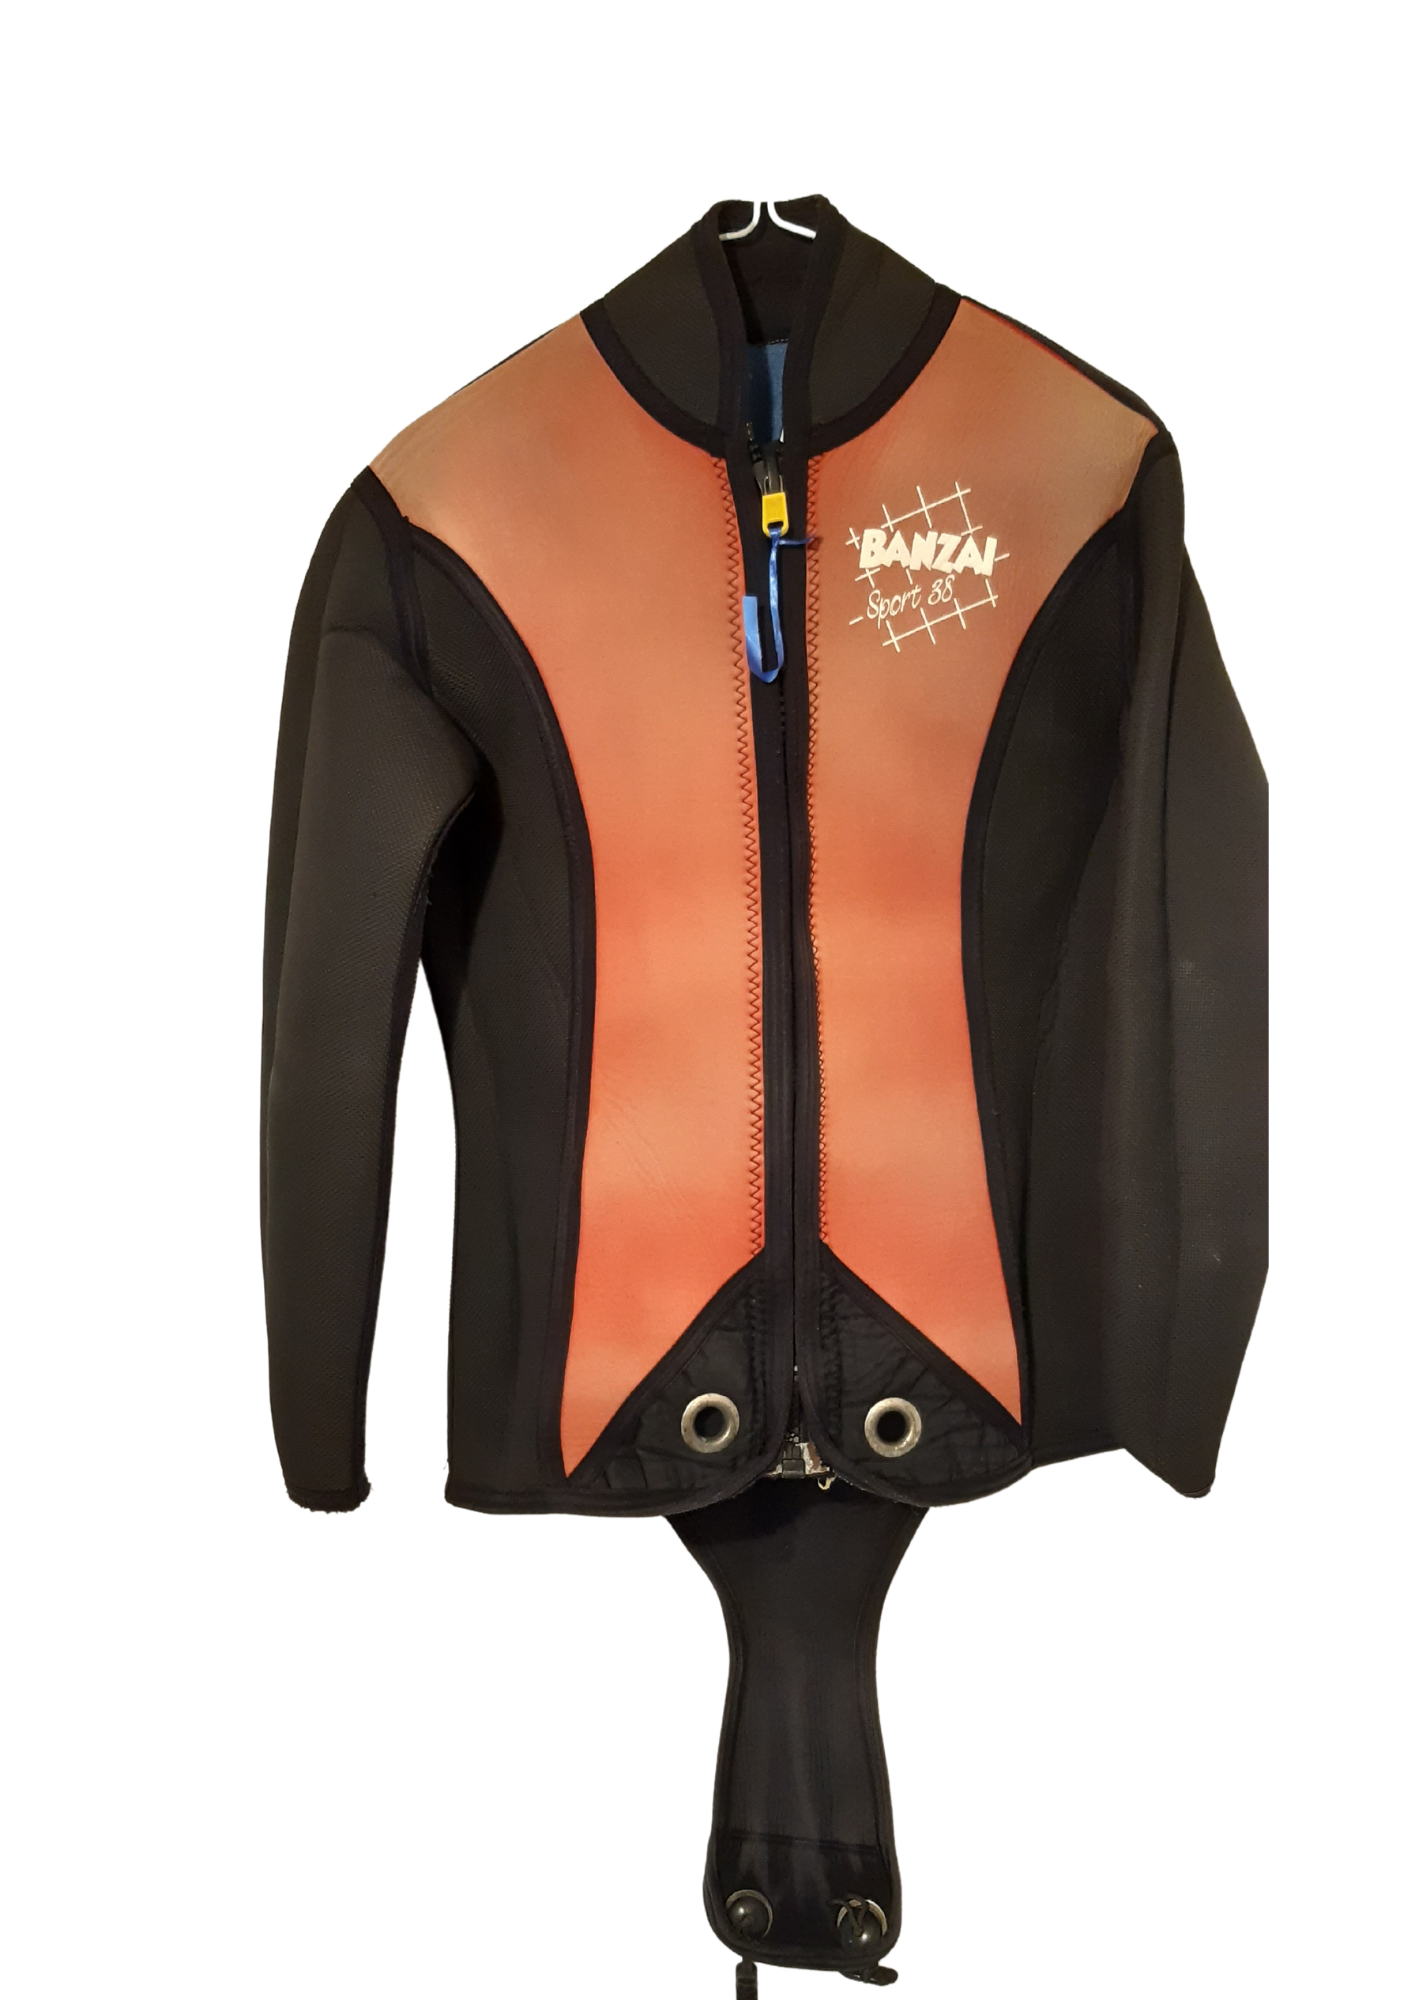 Banzai Sport 38 2pc wetsuit - Size Medium/Short